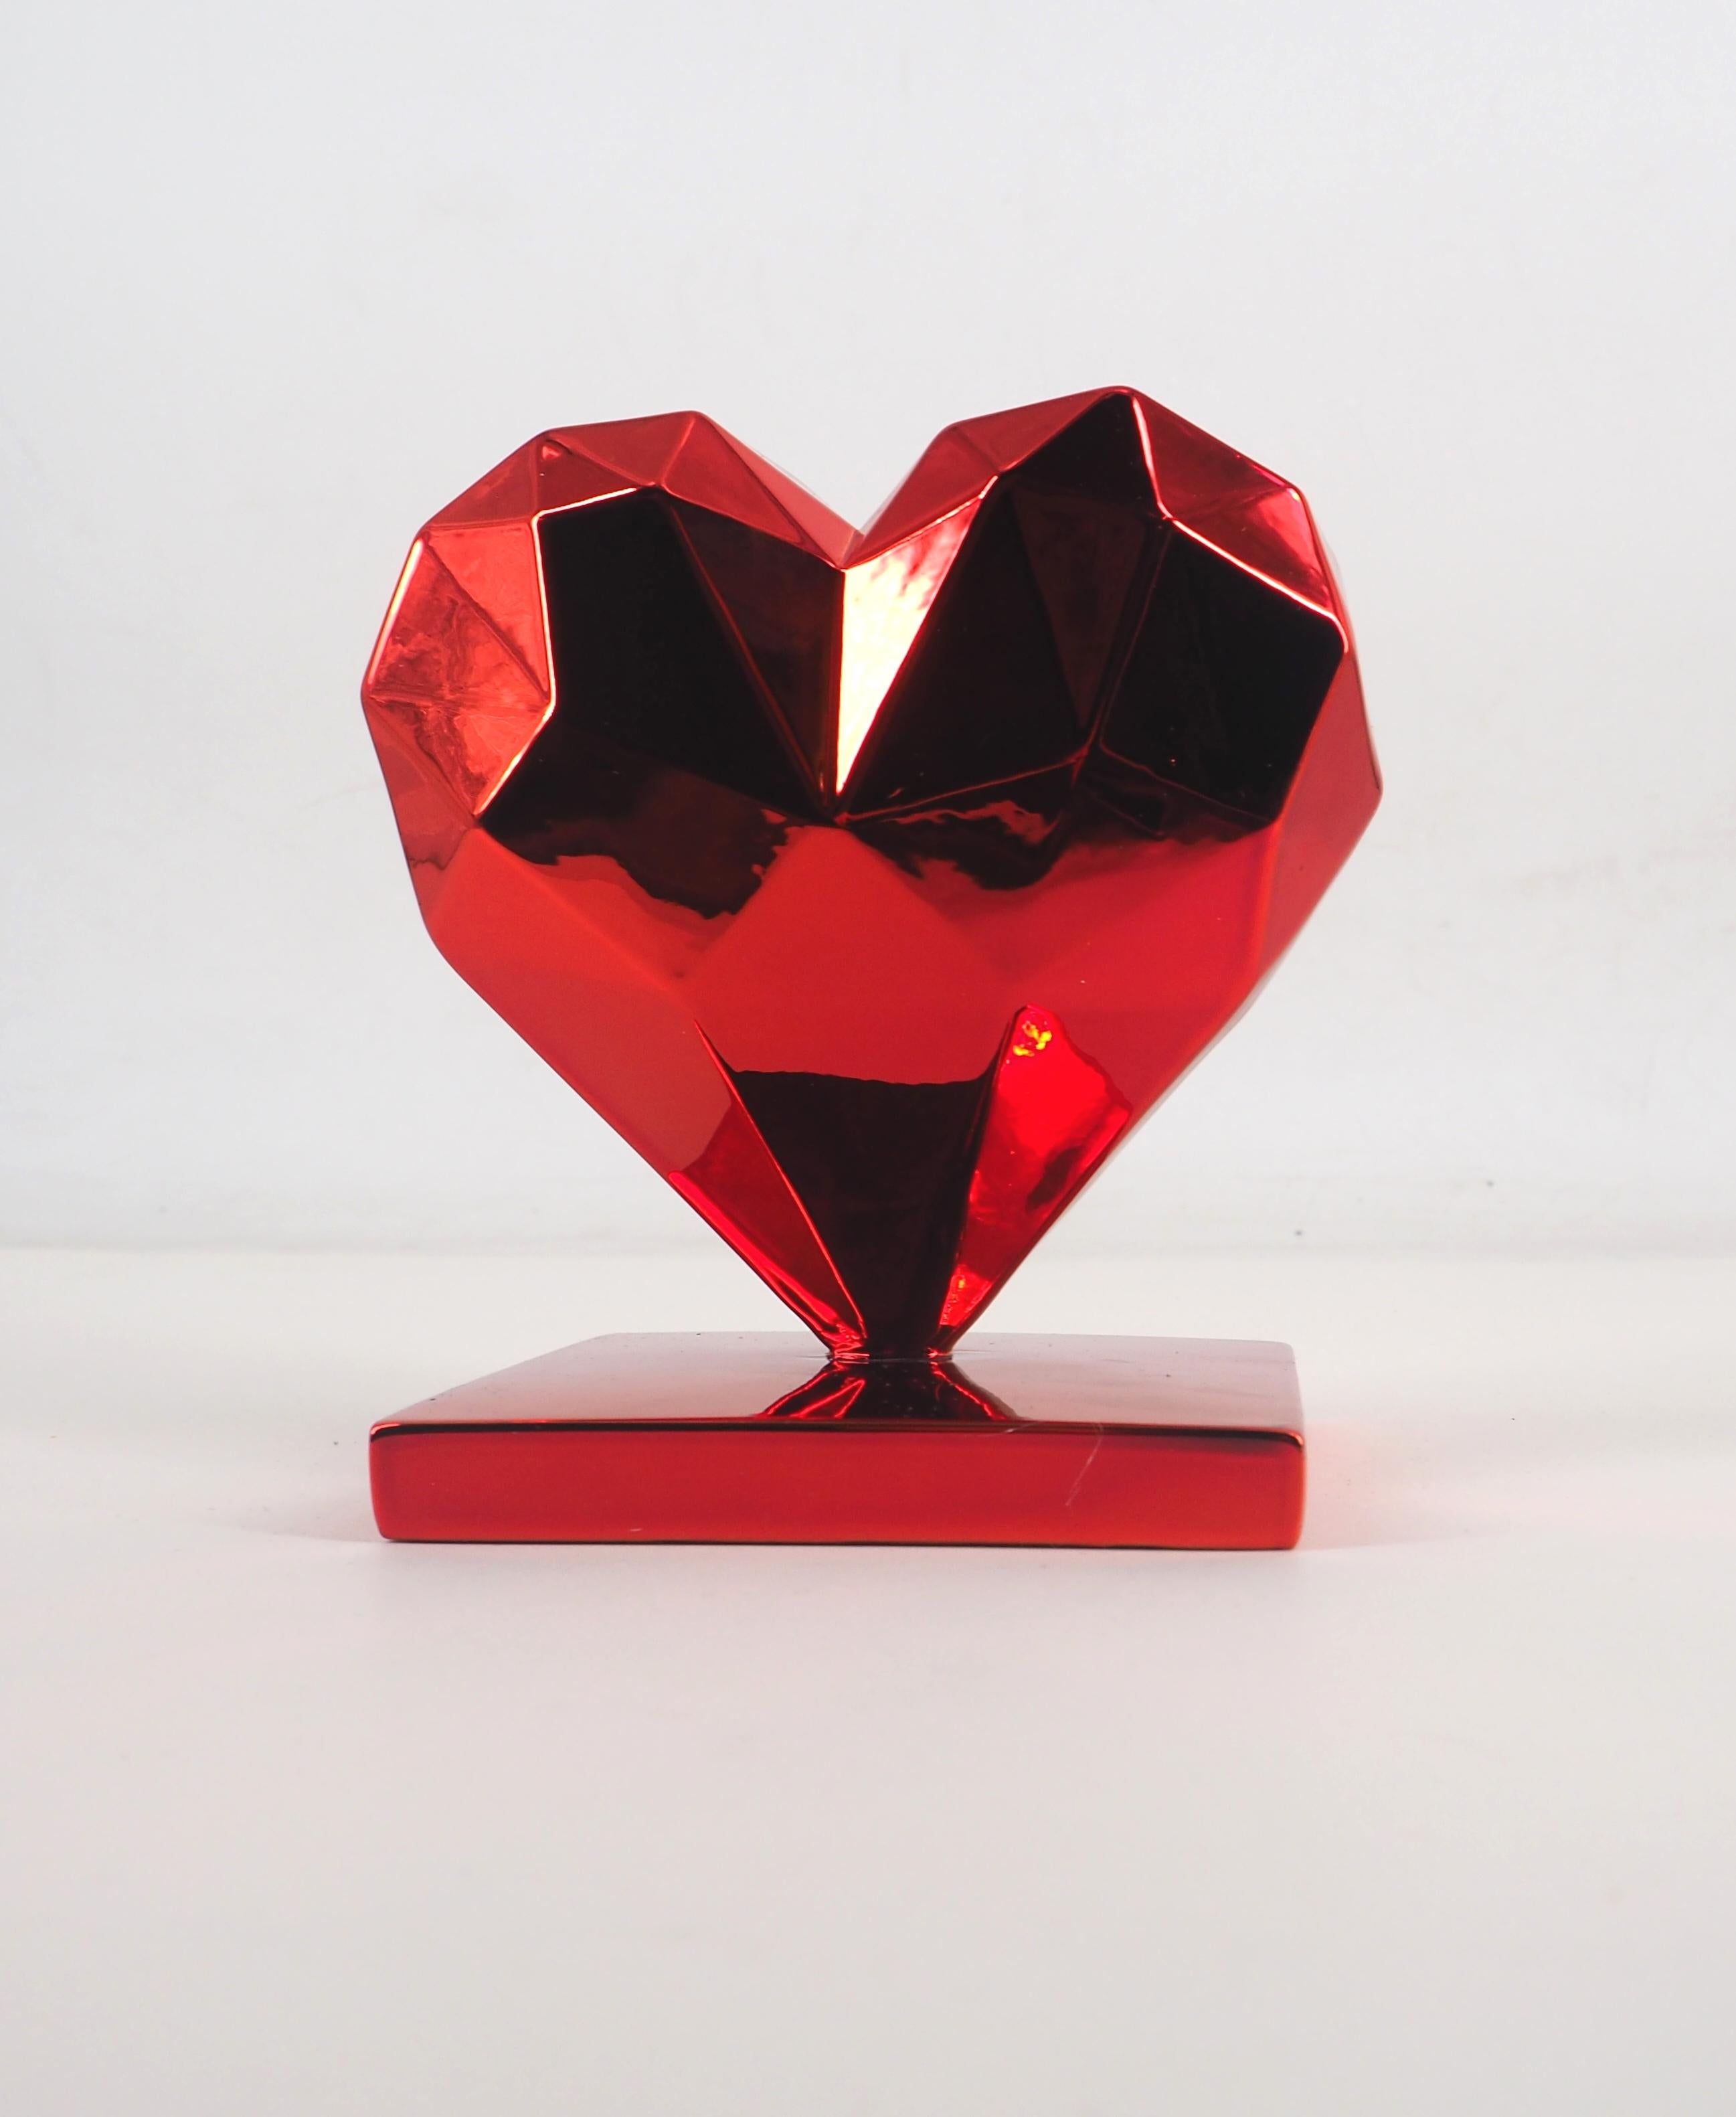 Heart Spirit (Red Edition) - Sculpture in original box with artist certificate